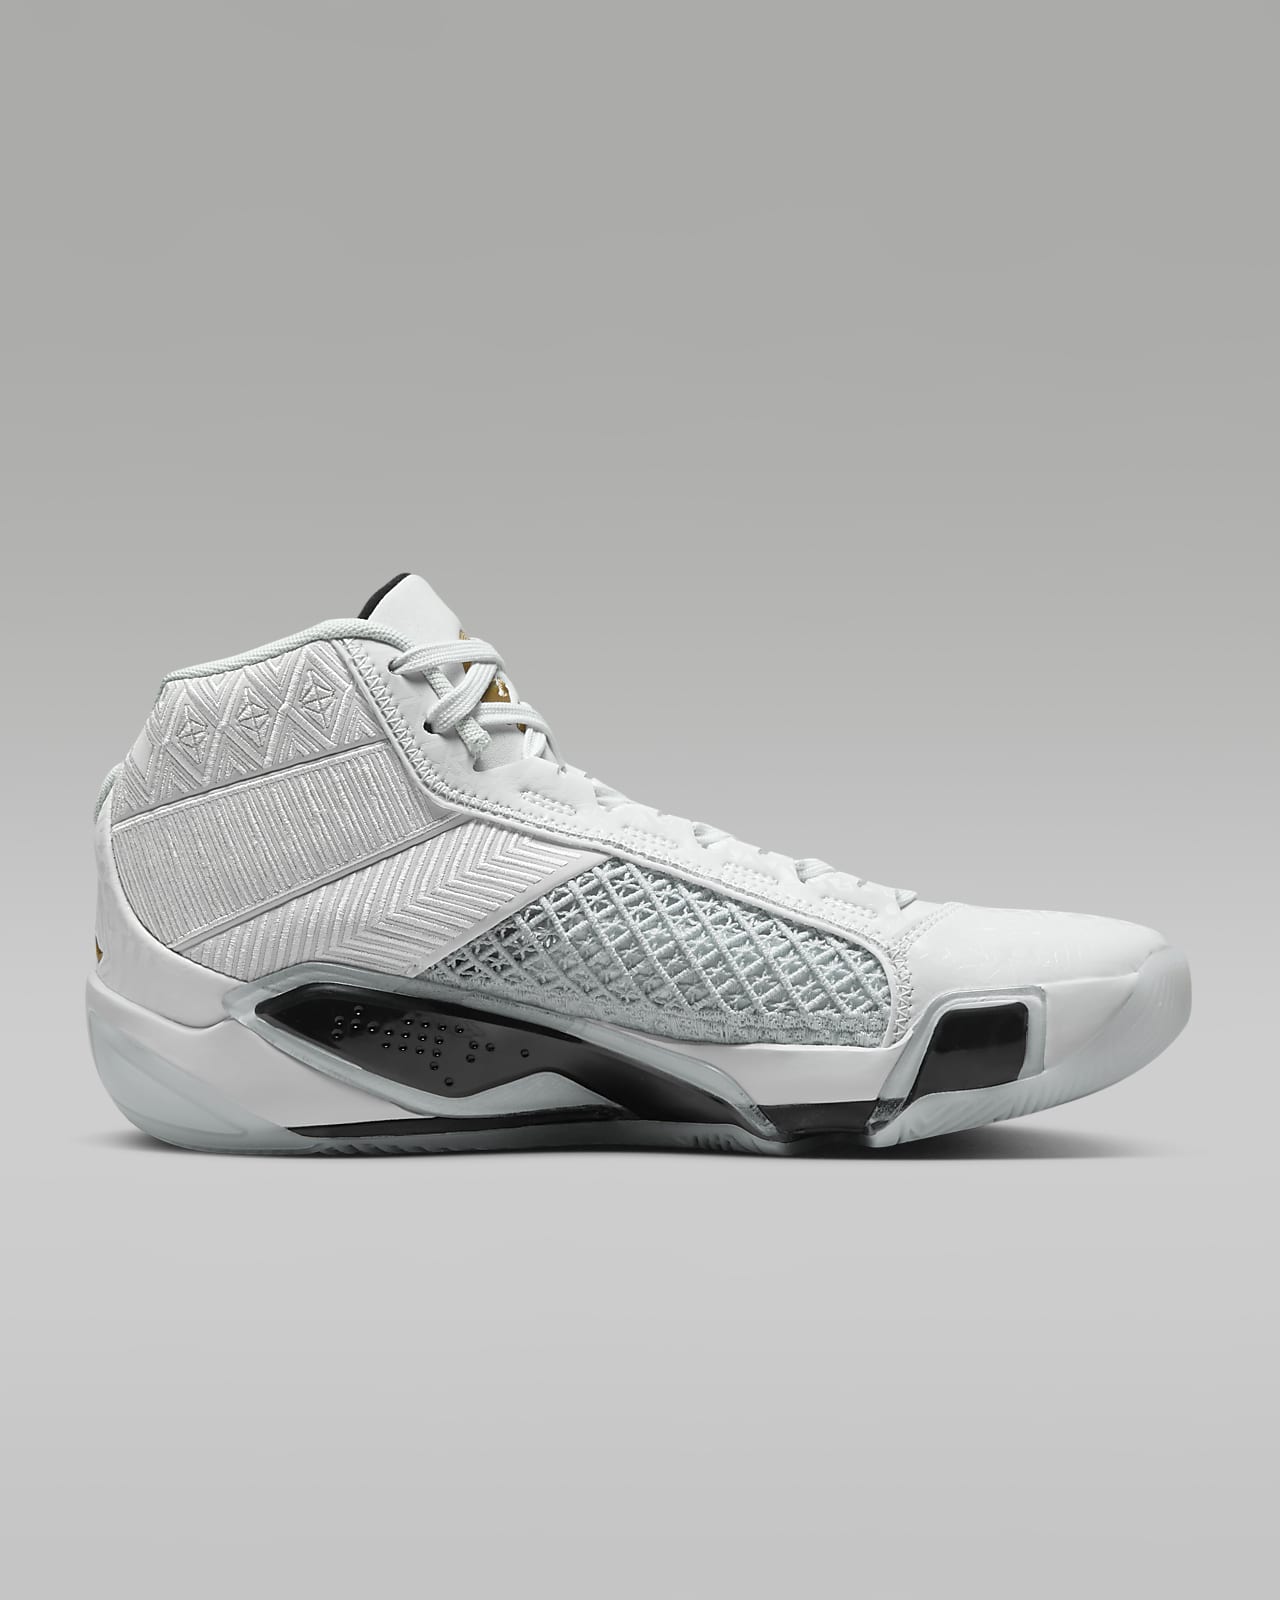 Michael Jordan Basketball Shoes: Nike Air Jordan VIII (8)